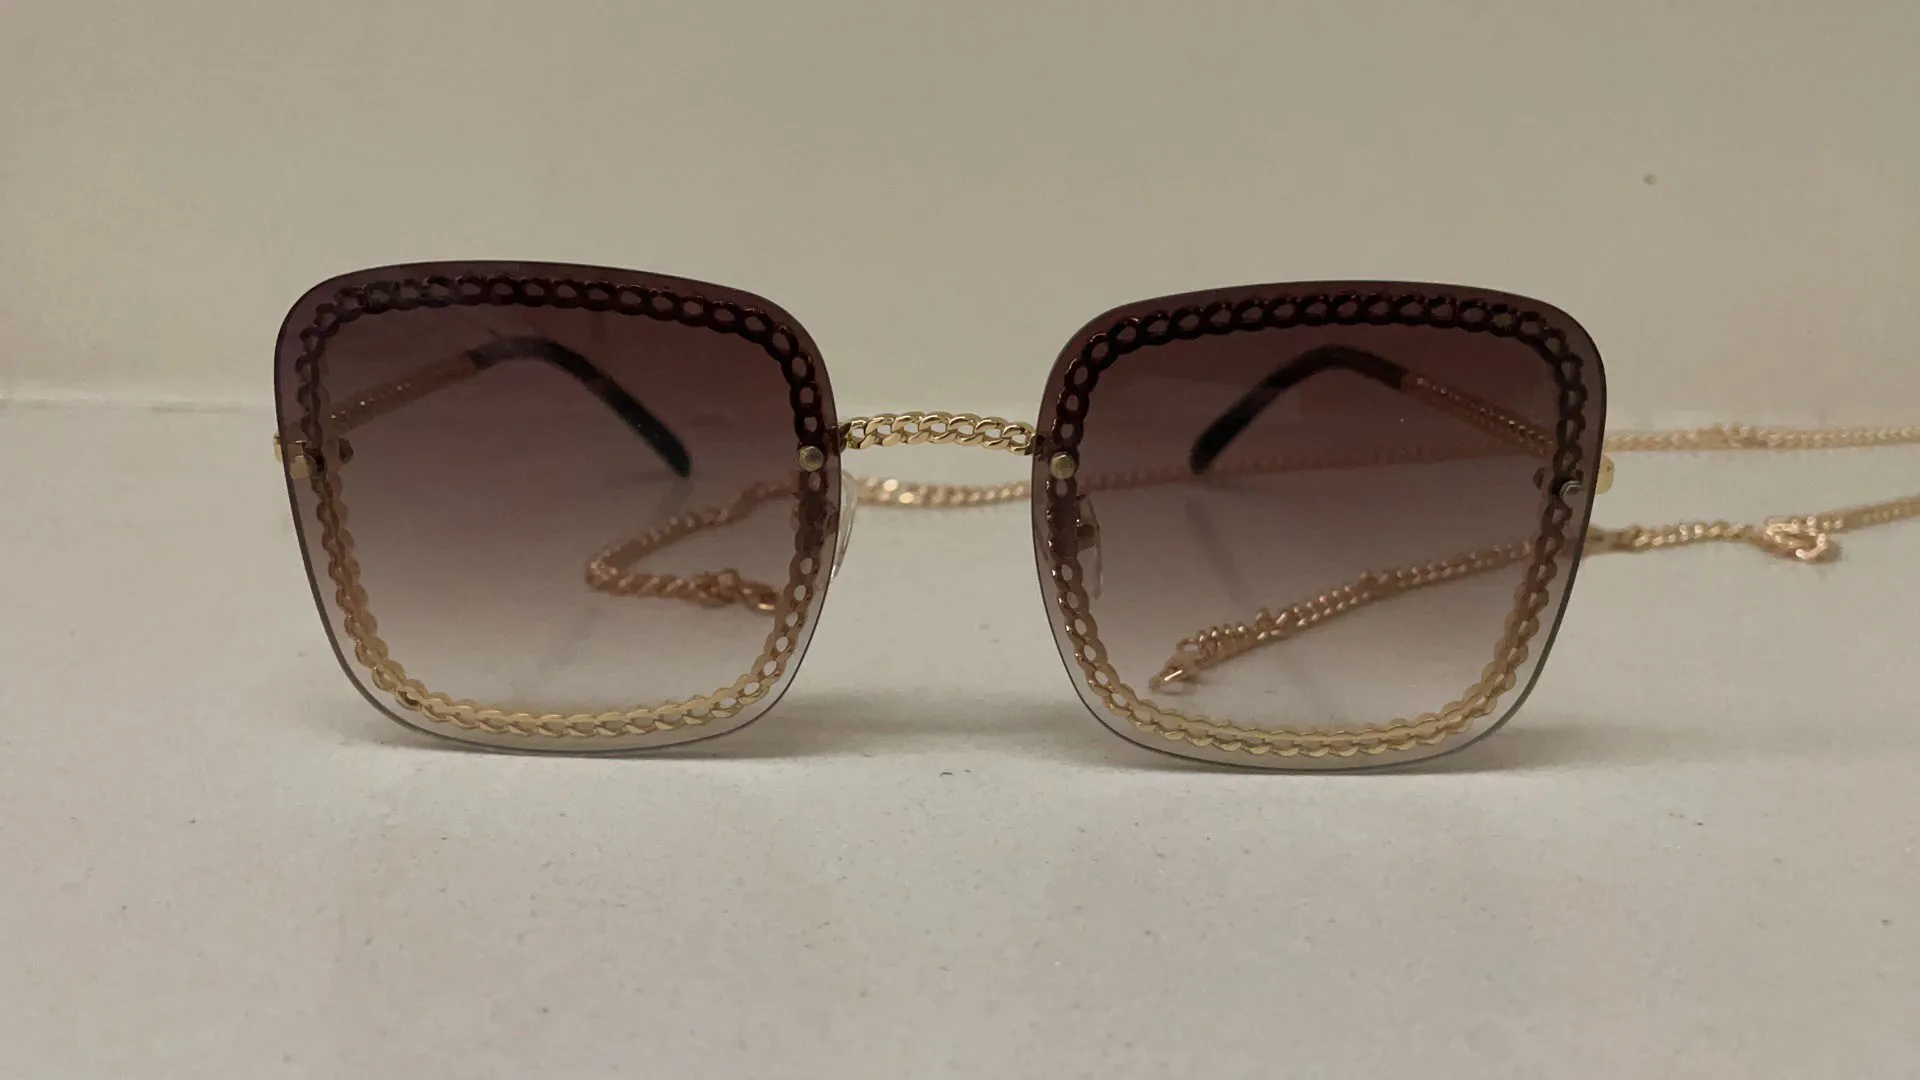 top kwaliteit dames zonnebril mannen zonnebril vrouwen glas mode stijl beschermt ogen Gafas sol lunettes de soleil met box297M